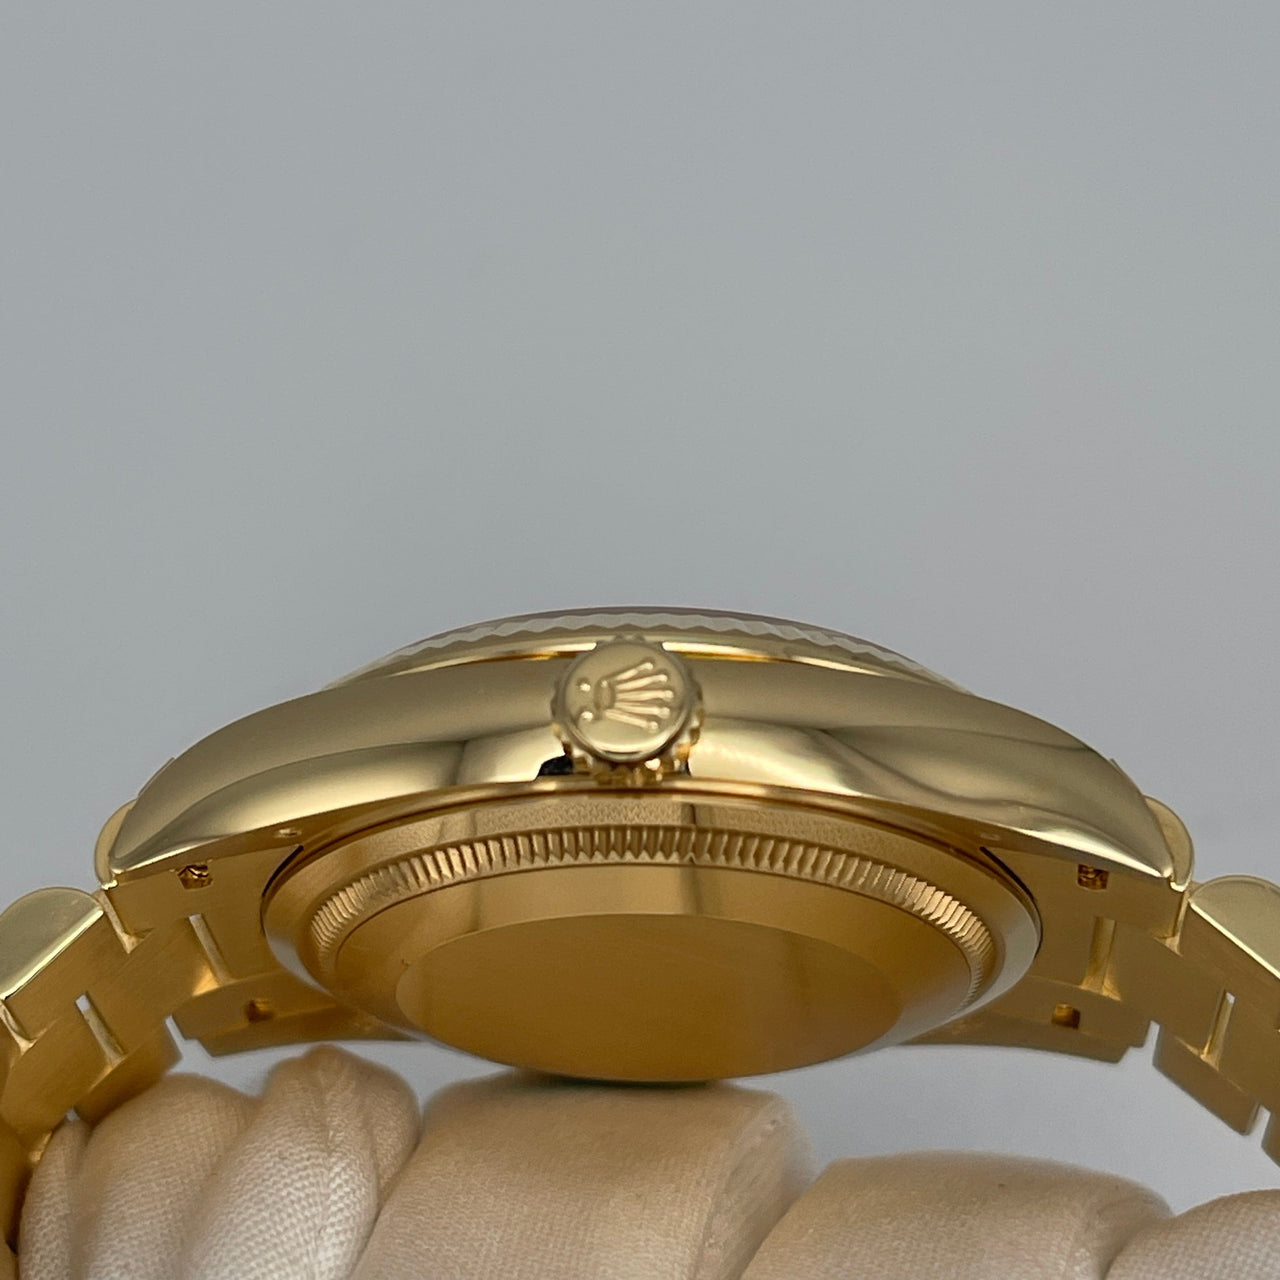 Luxury Watch Rolex Day-Date 36 Yellow Gold Champagne Diamond Dial 128238 Wrist Aficionado